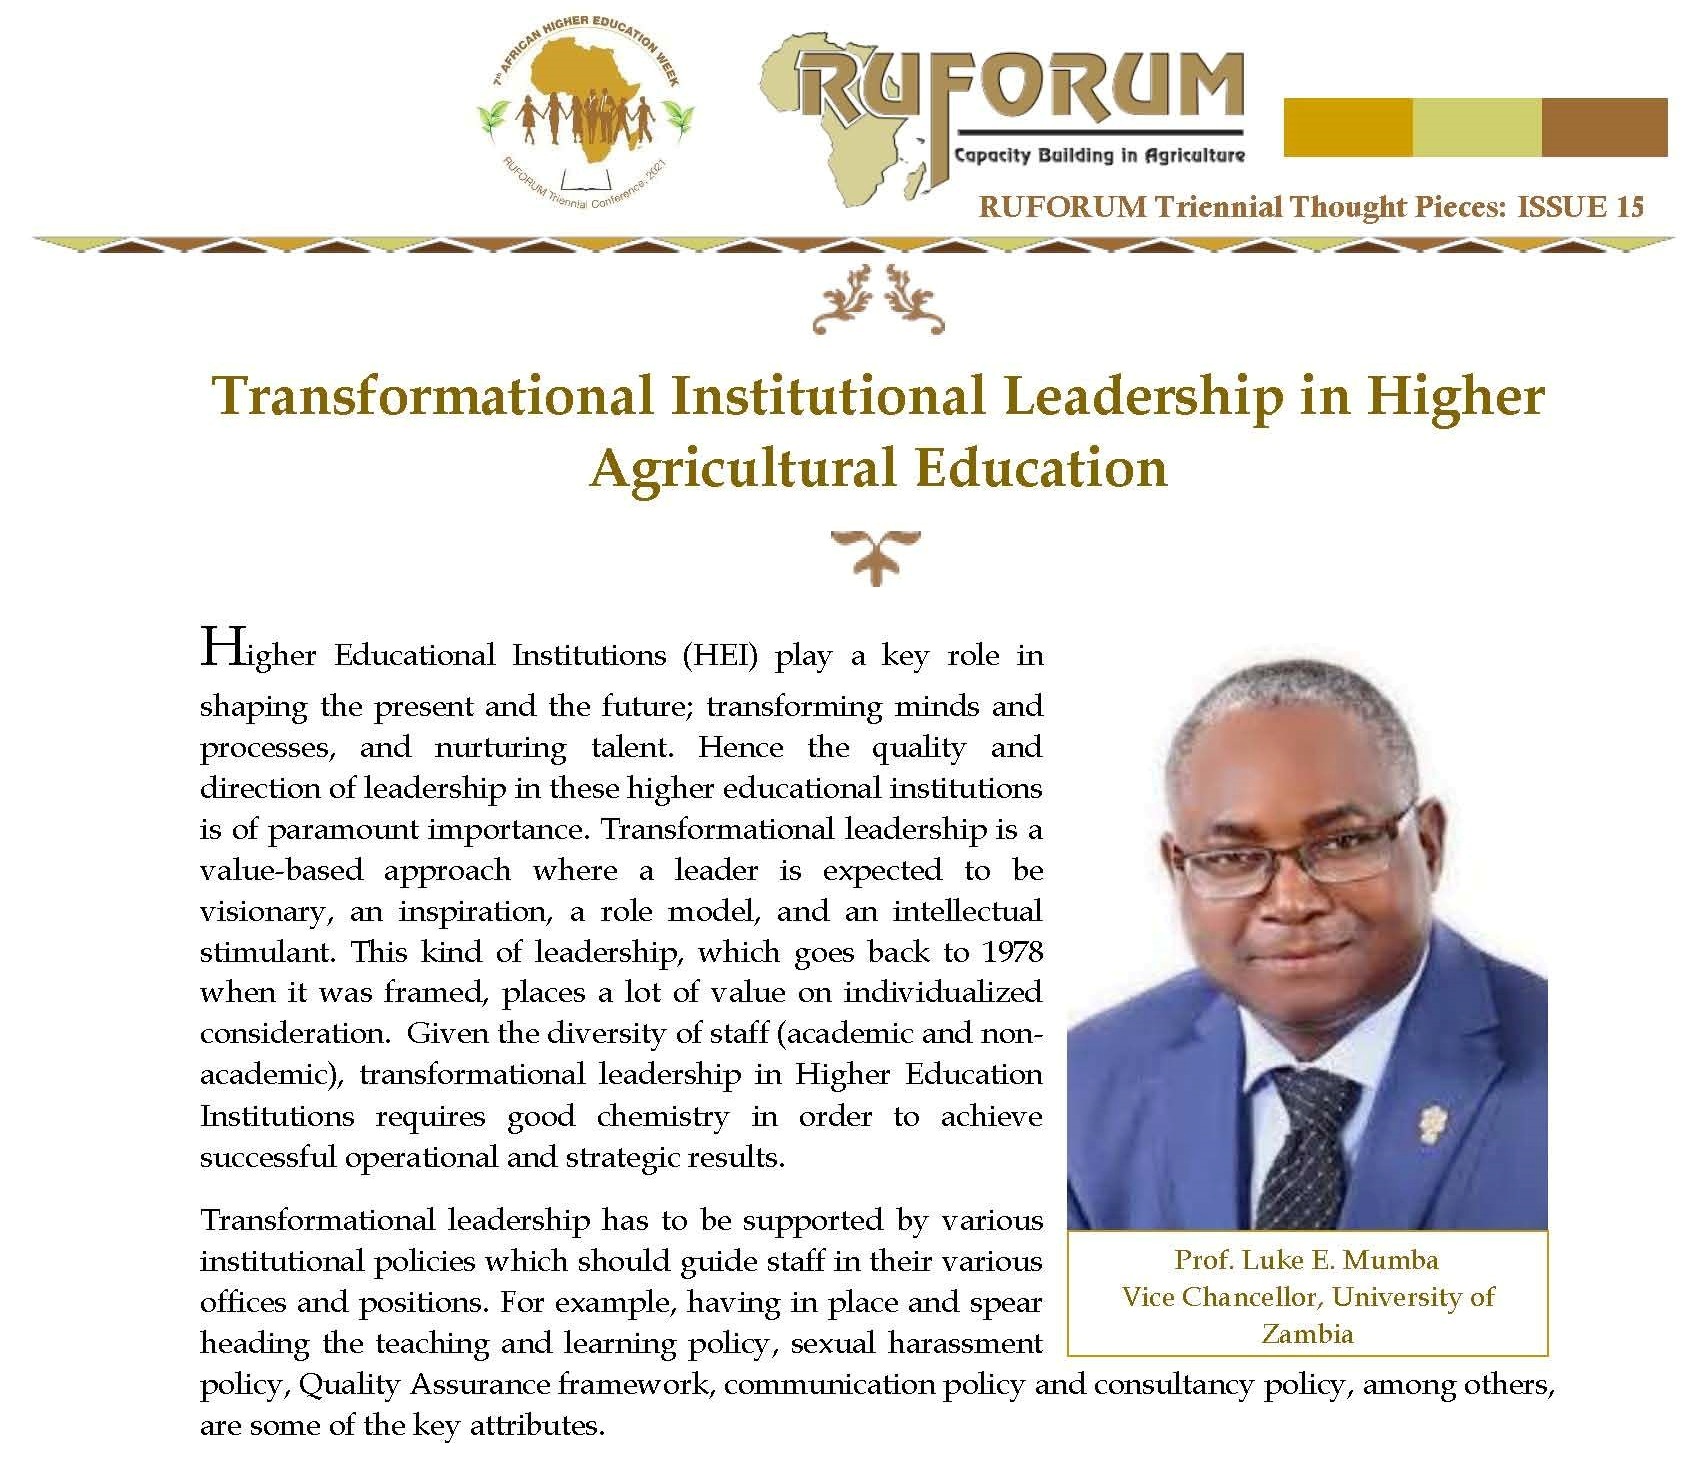 RUFORUM Triennial Thought Pieces: ISSUE 15 by Prof. Luke E. Mumba, Vice Chancellor, University of Zambia.